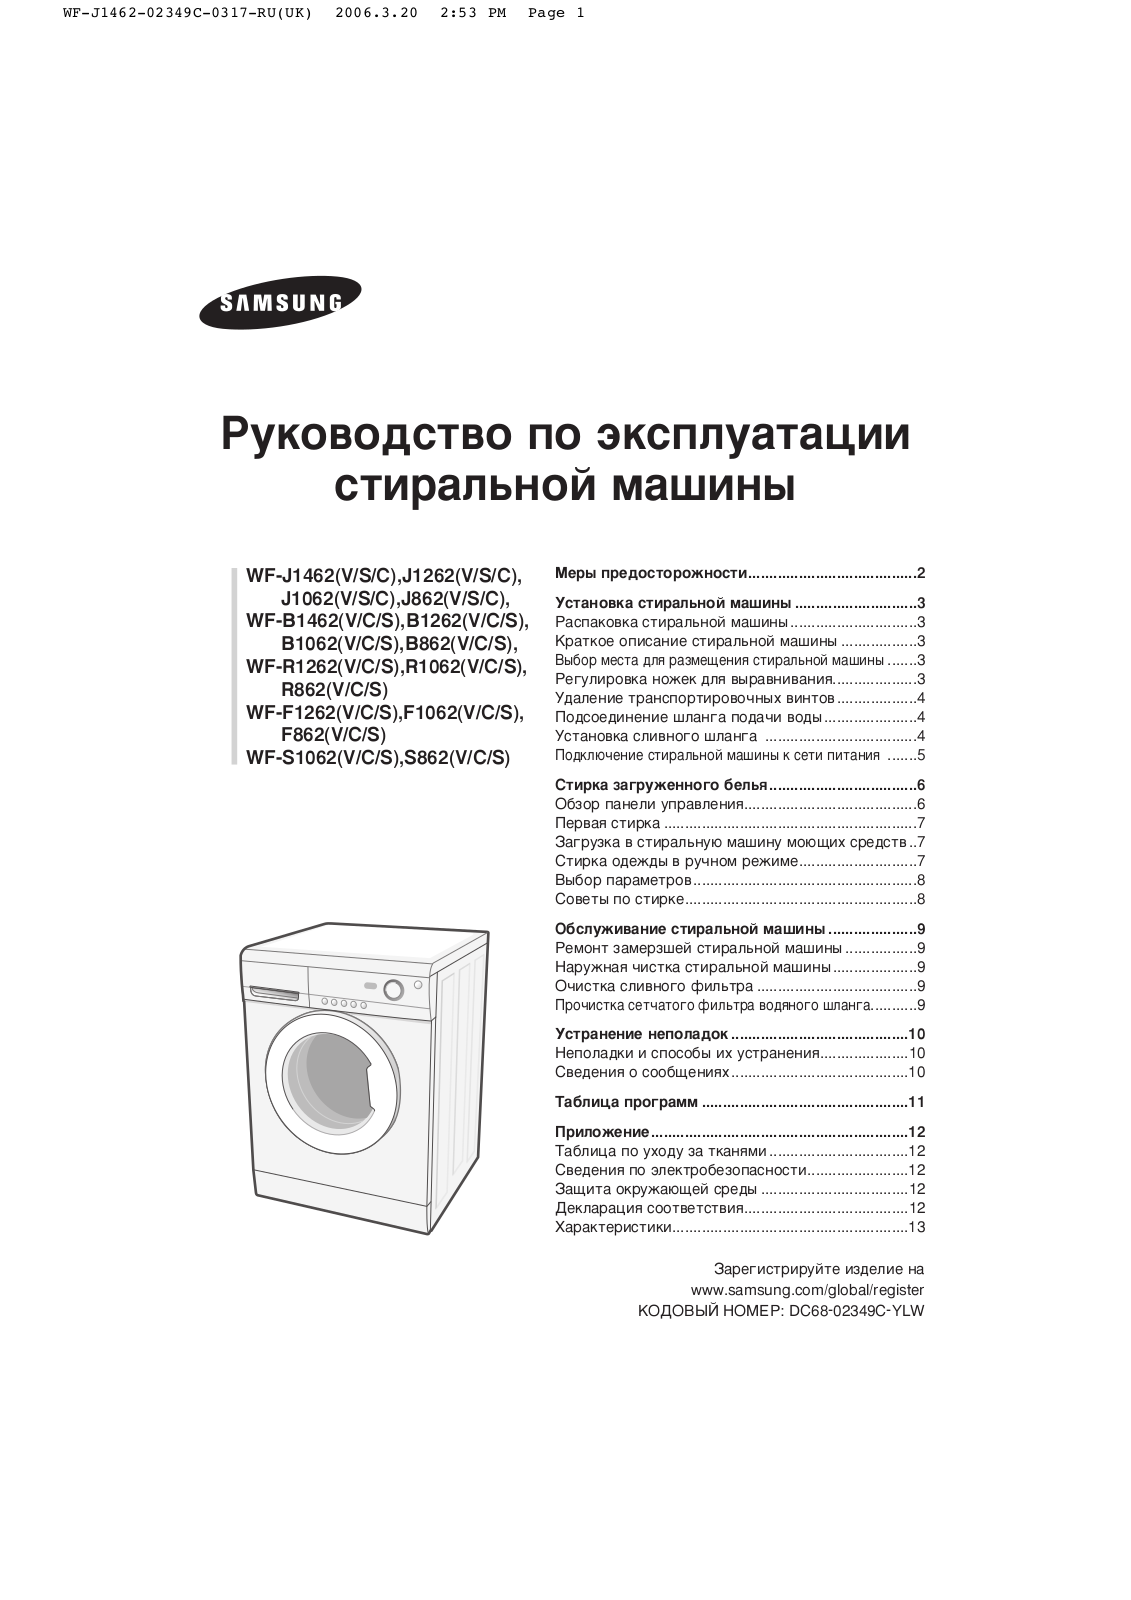 Samsung WF-J1262 User Manual